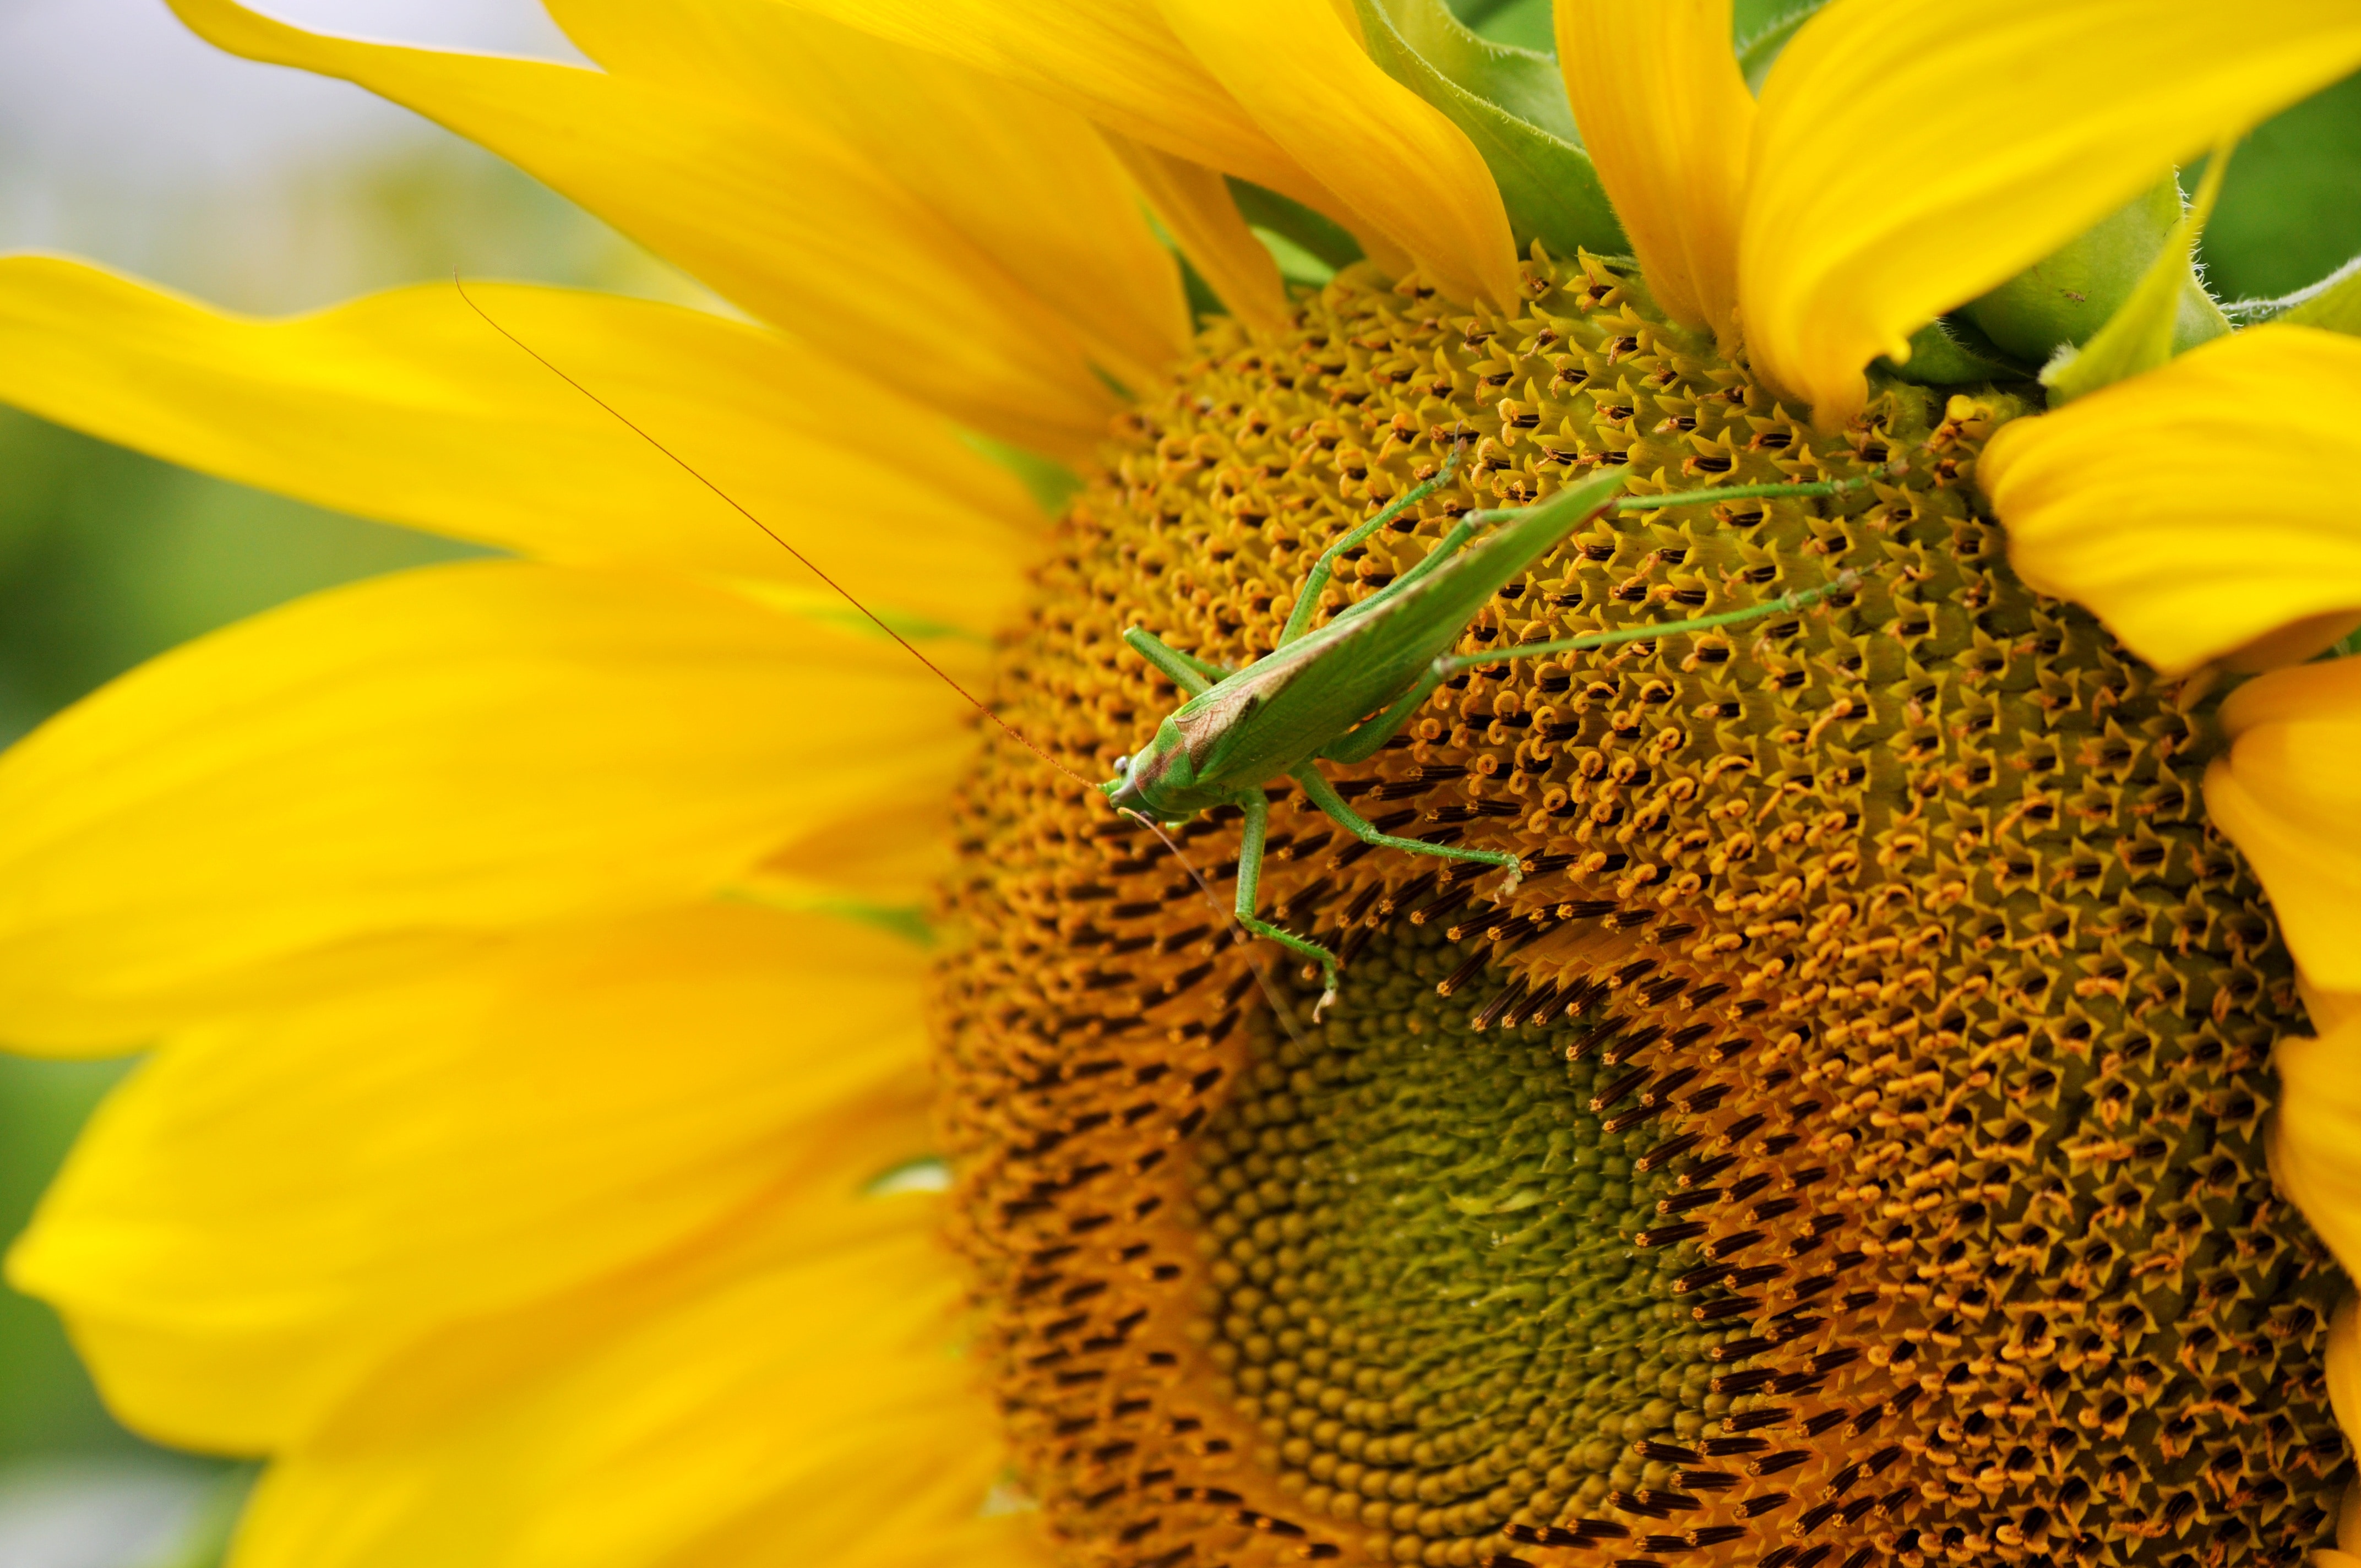 green grasshopper and yellow sunflower